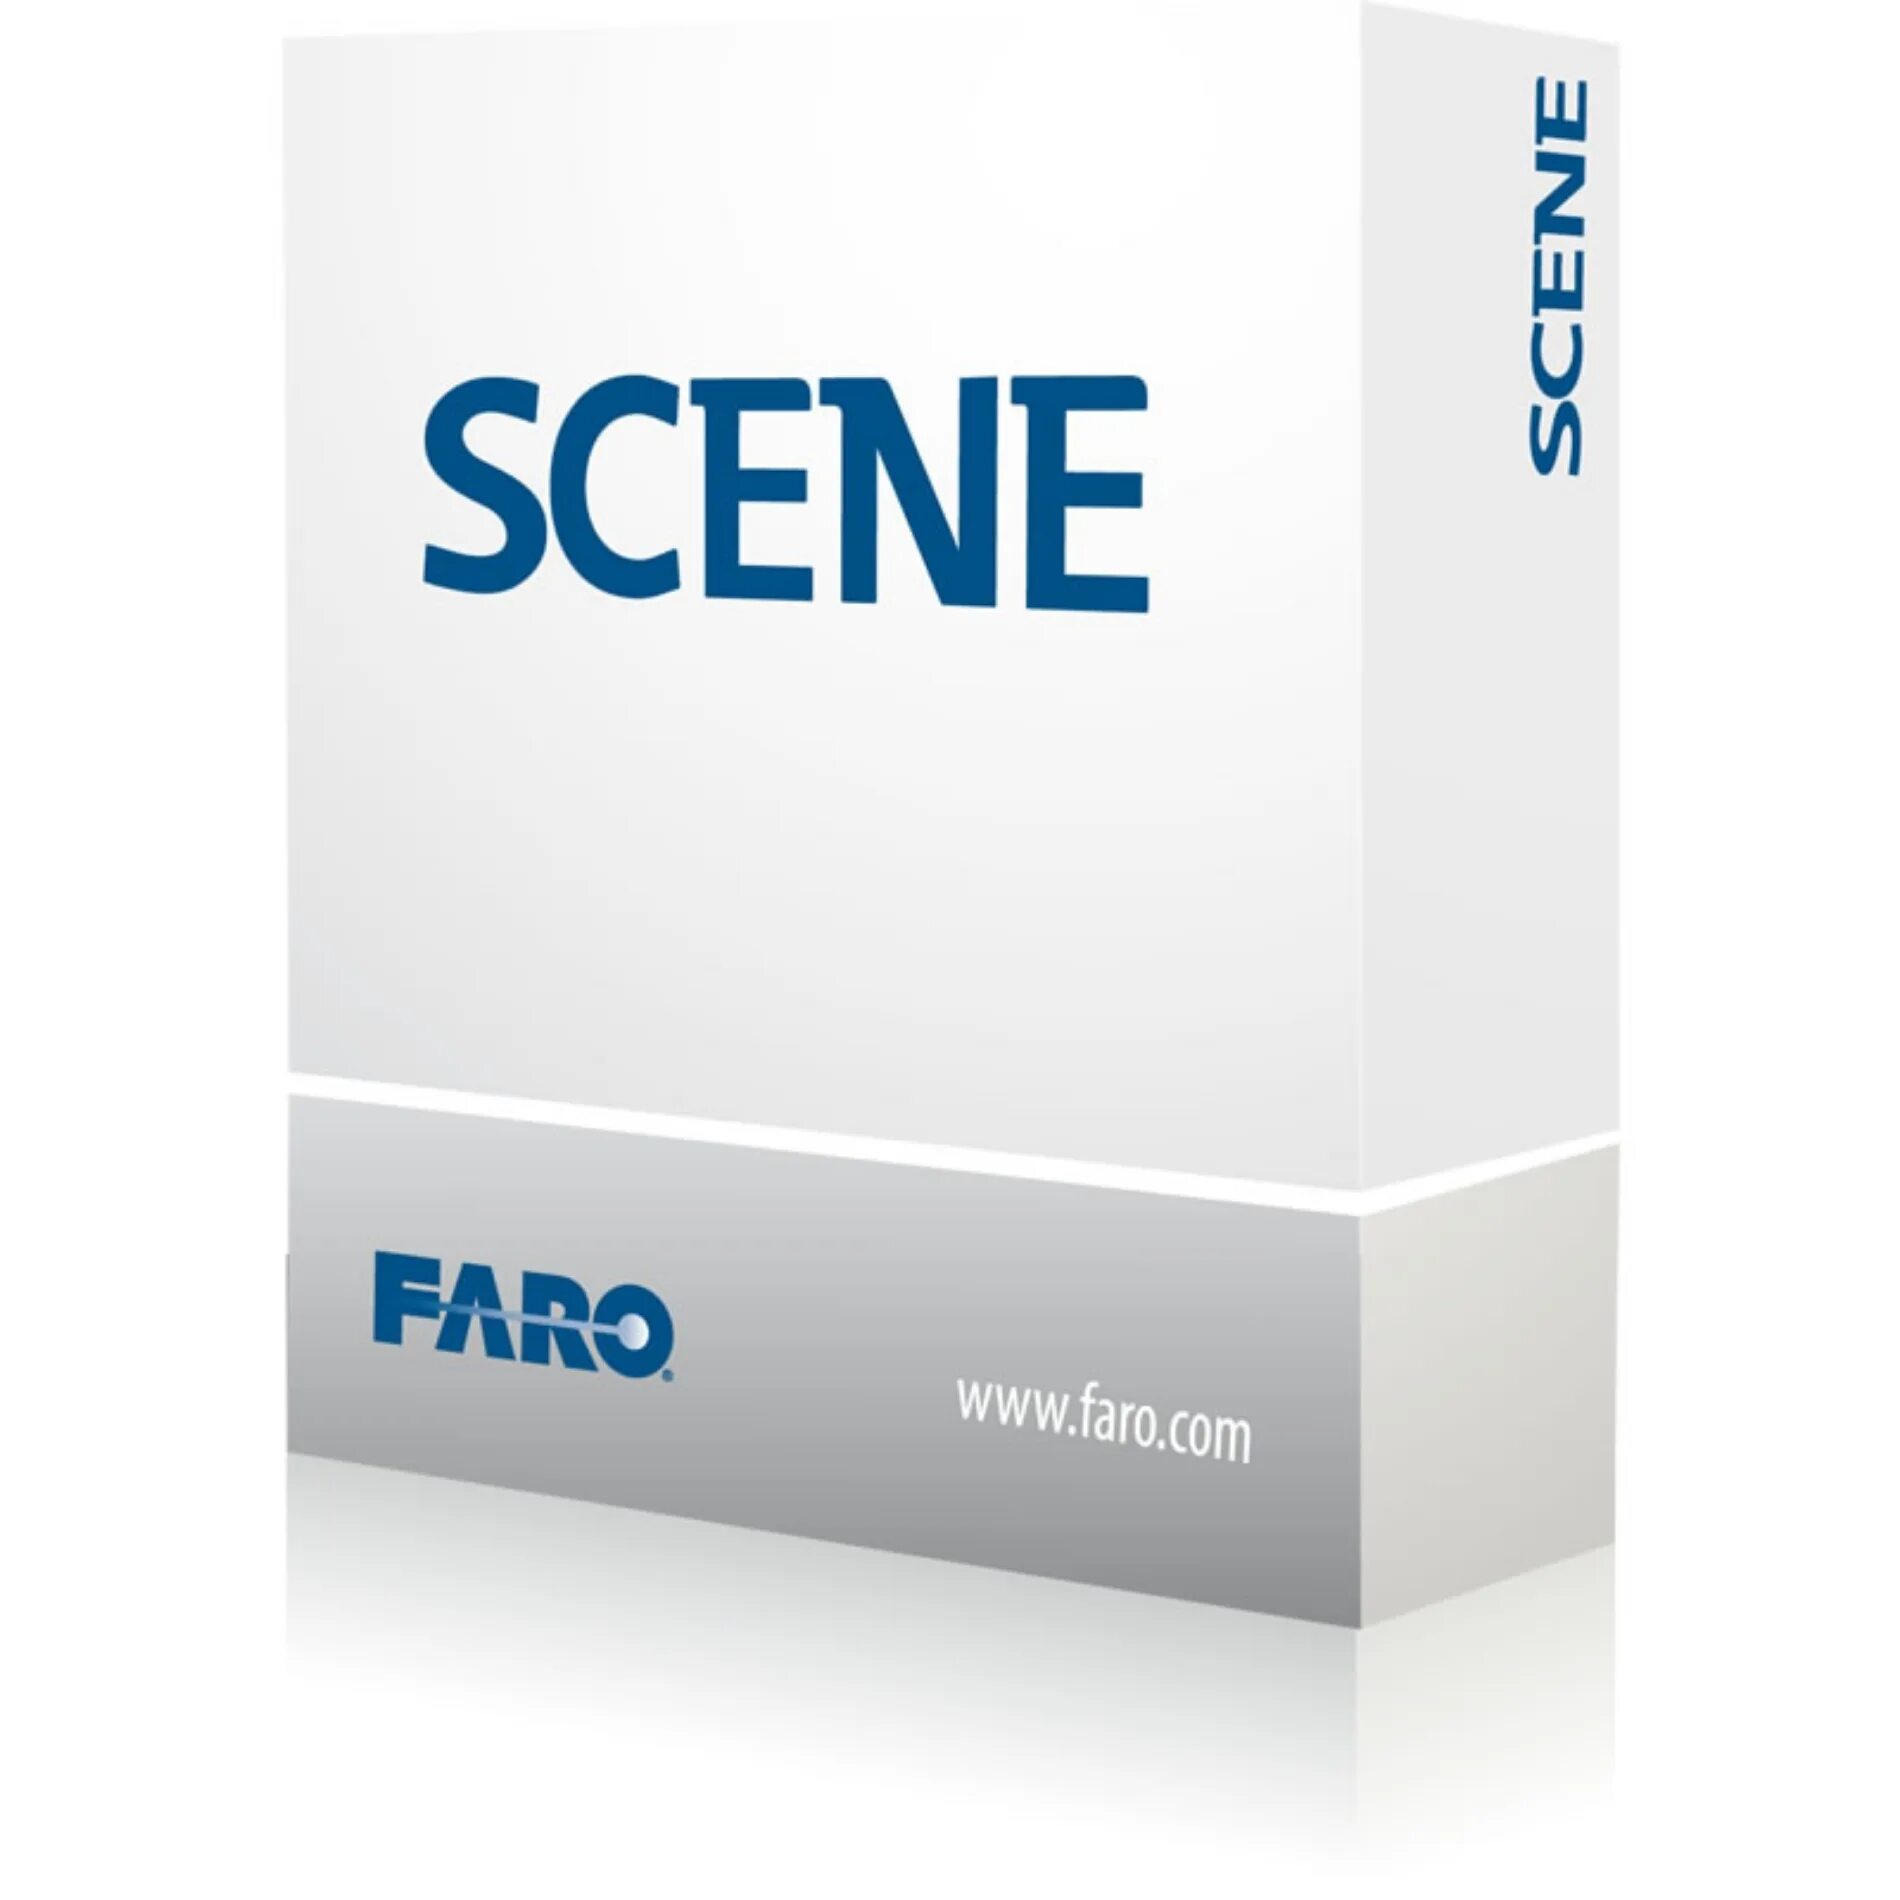 Faro scene. Faro Scene Форматы экспорта 2020. Faro Scene eliminate duplicate points.